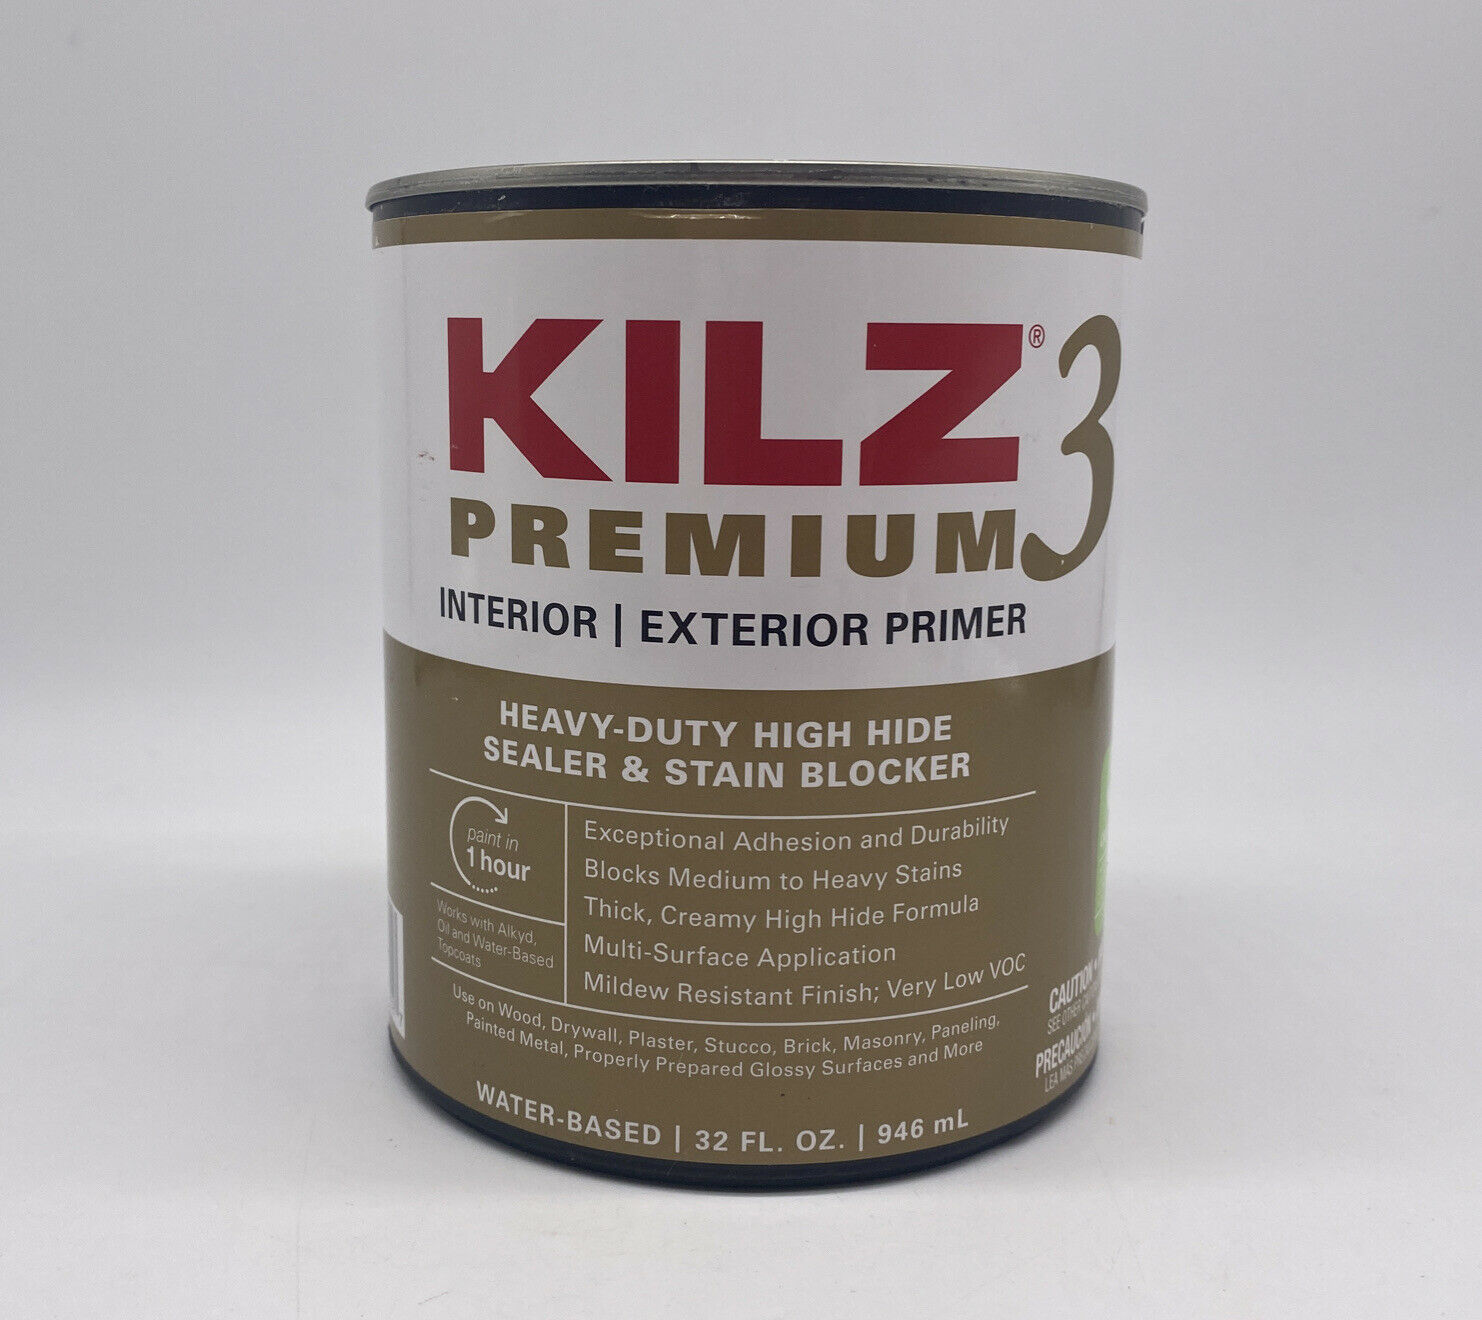 New Kilz 3 Premium Primer Interior Exterior Sealer Stain Blocker White